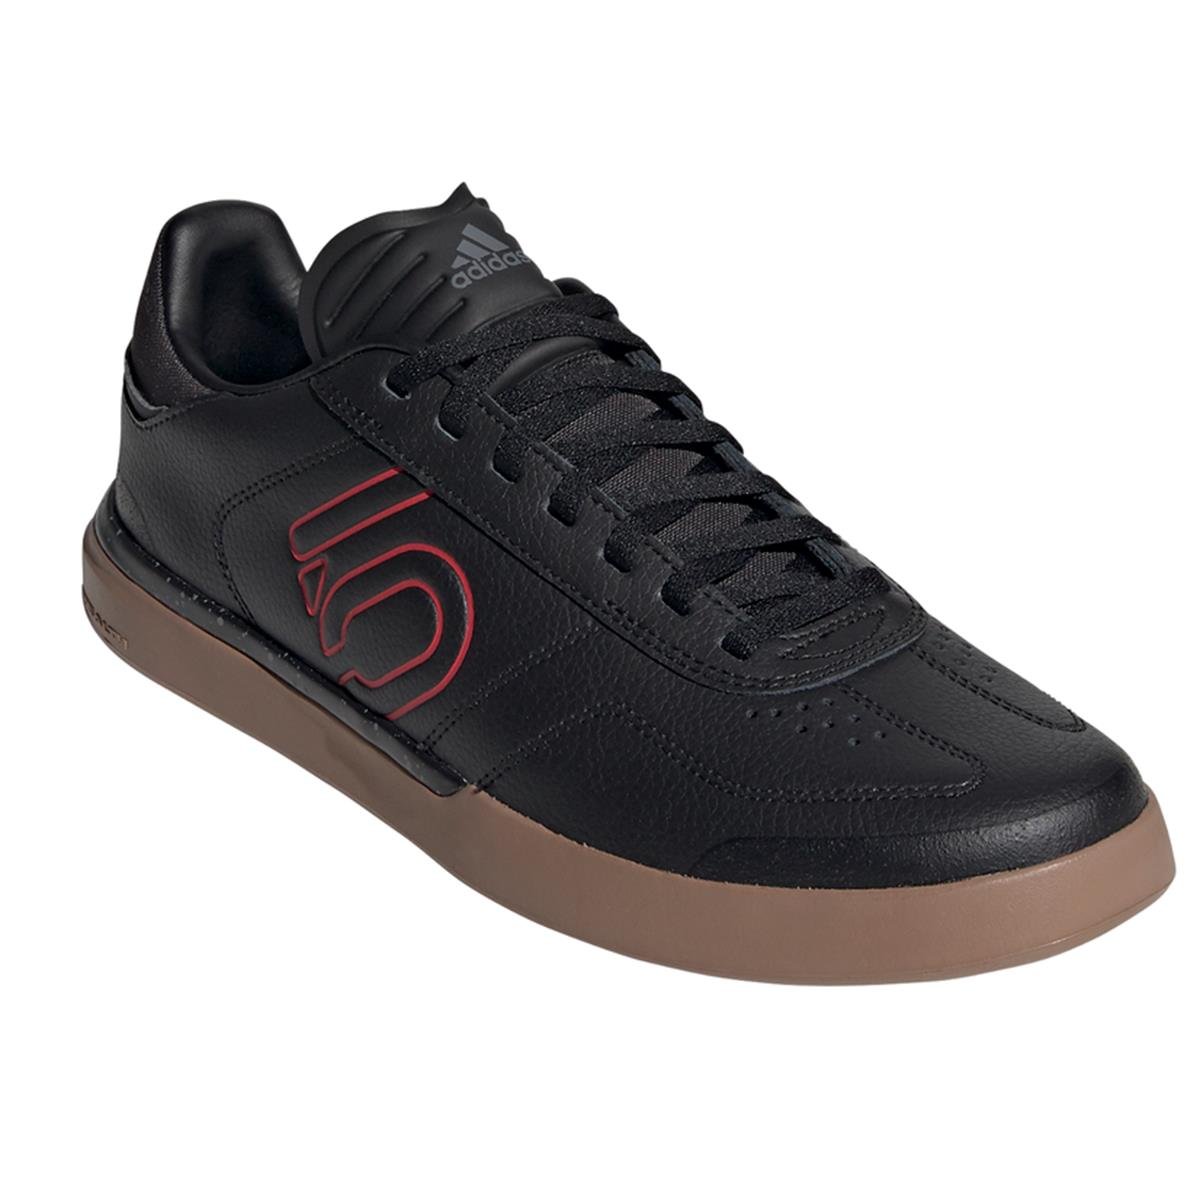 Five Ten Chaussures VTT Sleuth DLX Core Black/Scarlet/Gum